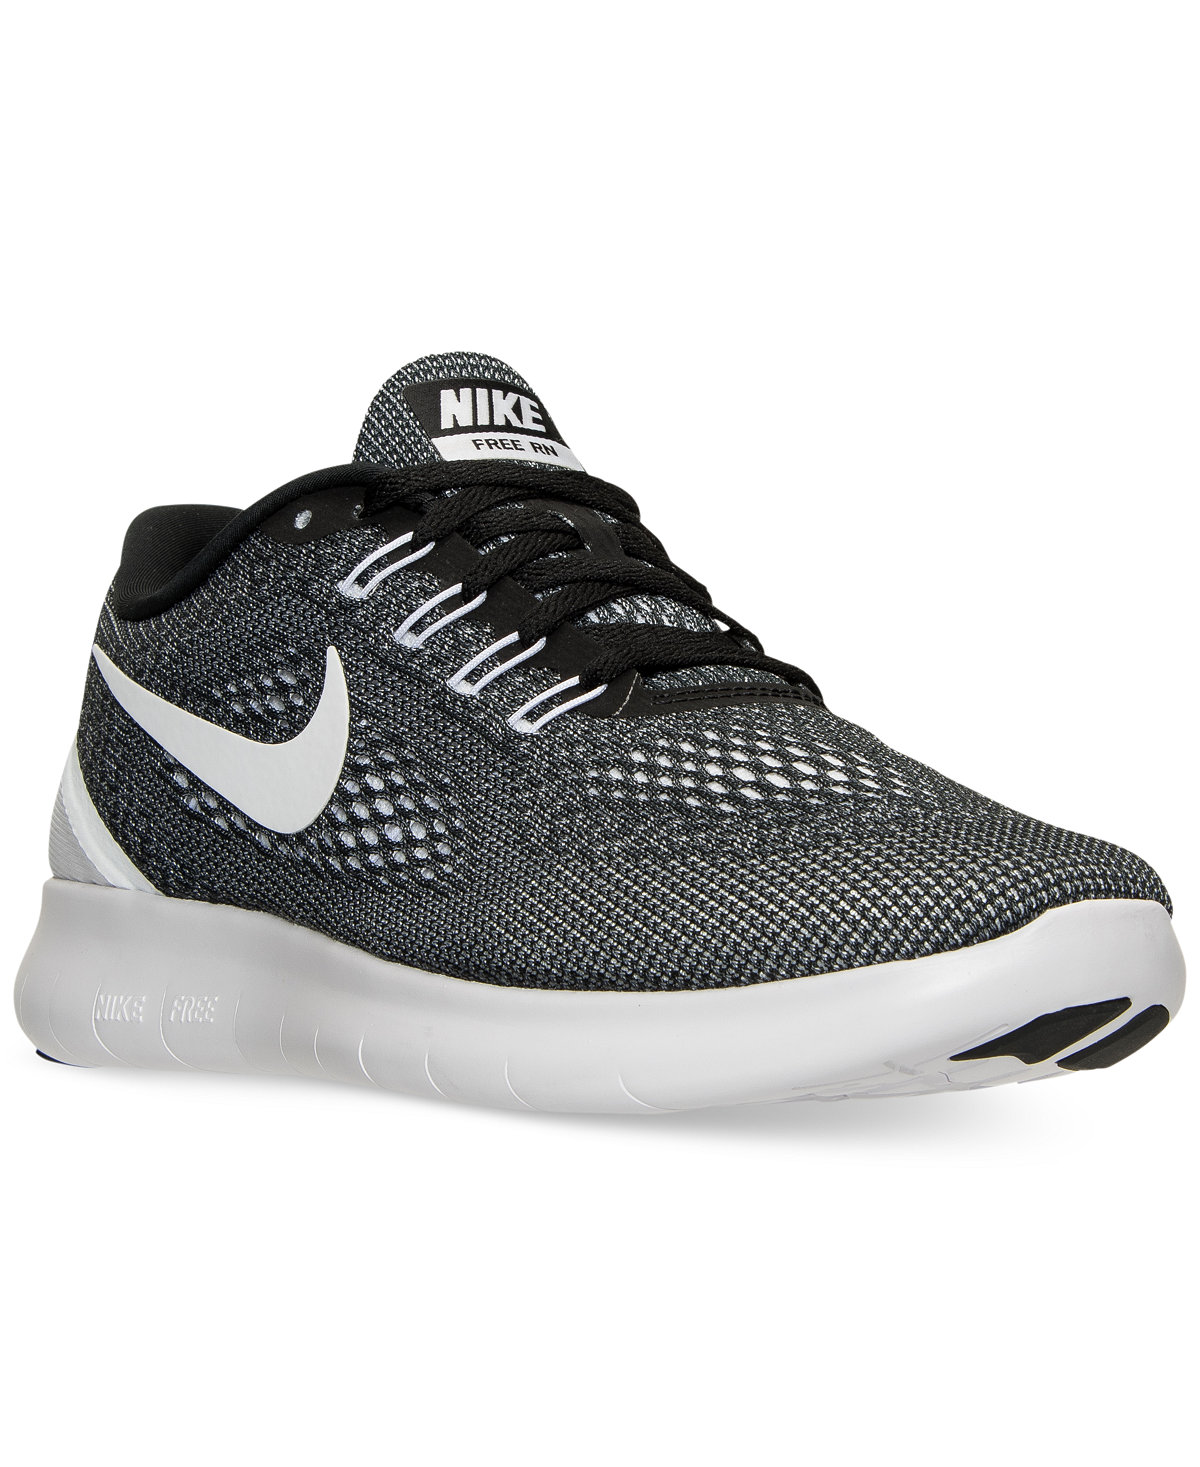 Nike Men's Free Run Running Shoes + $20 Macys eGift Card $52.50 + free ...